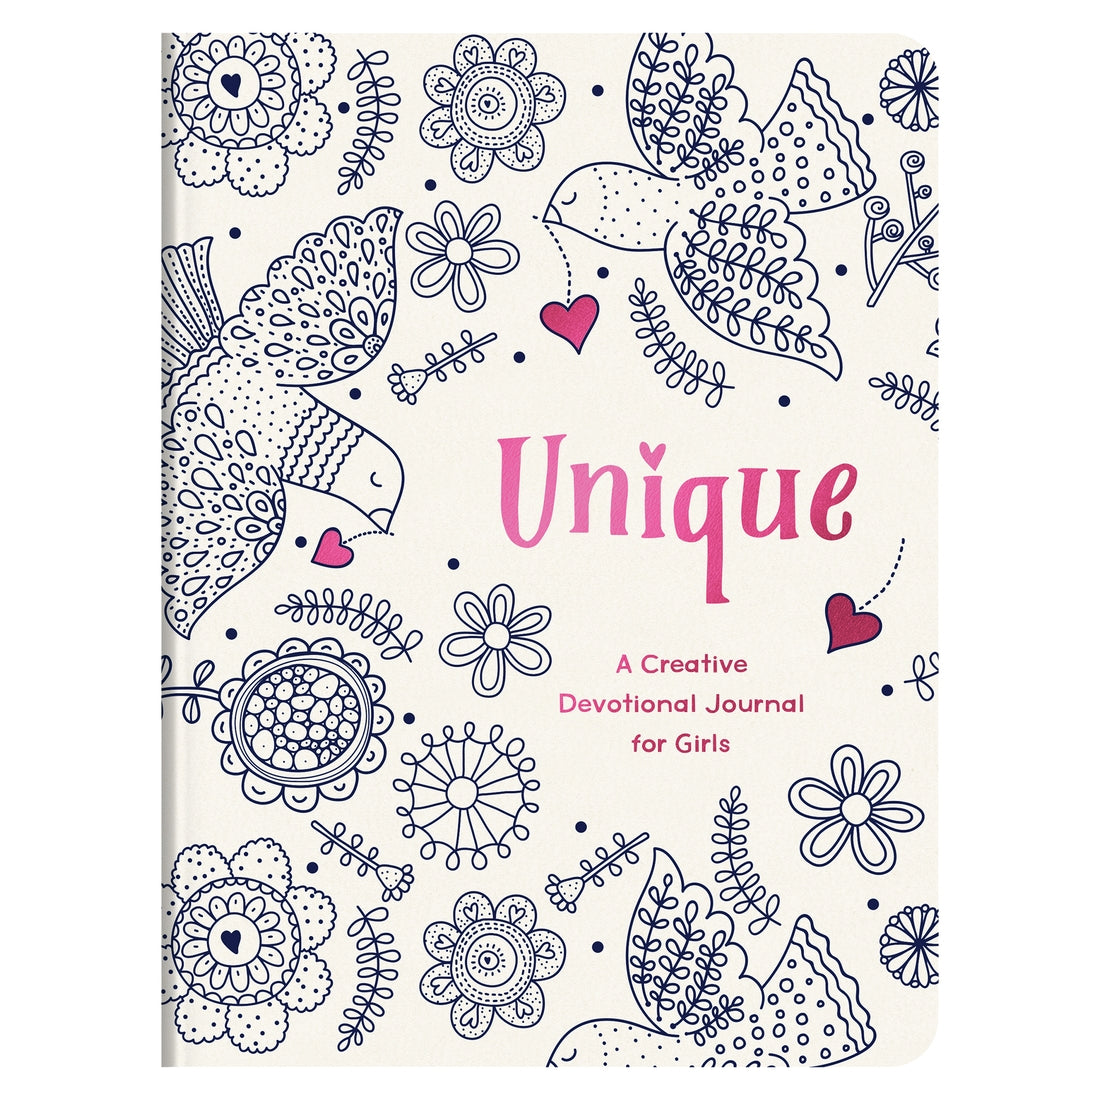 Unique: A Creative Devotional Journal for Girls